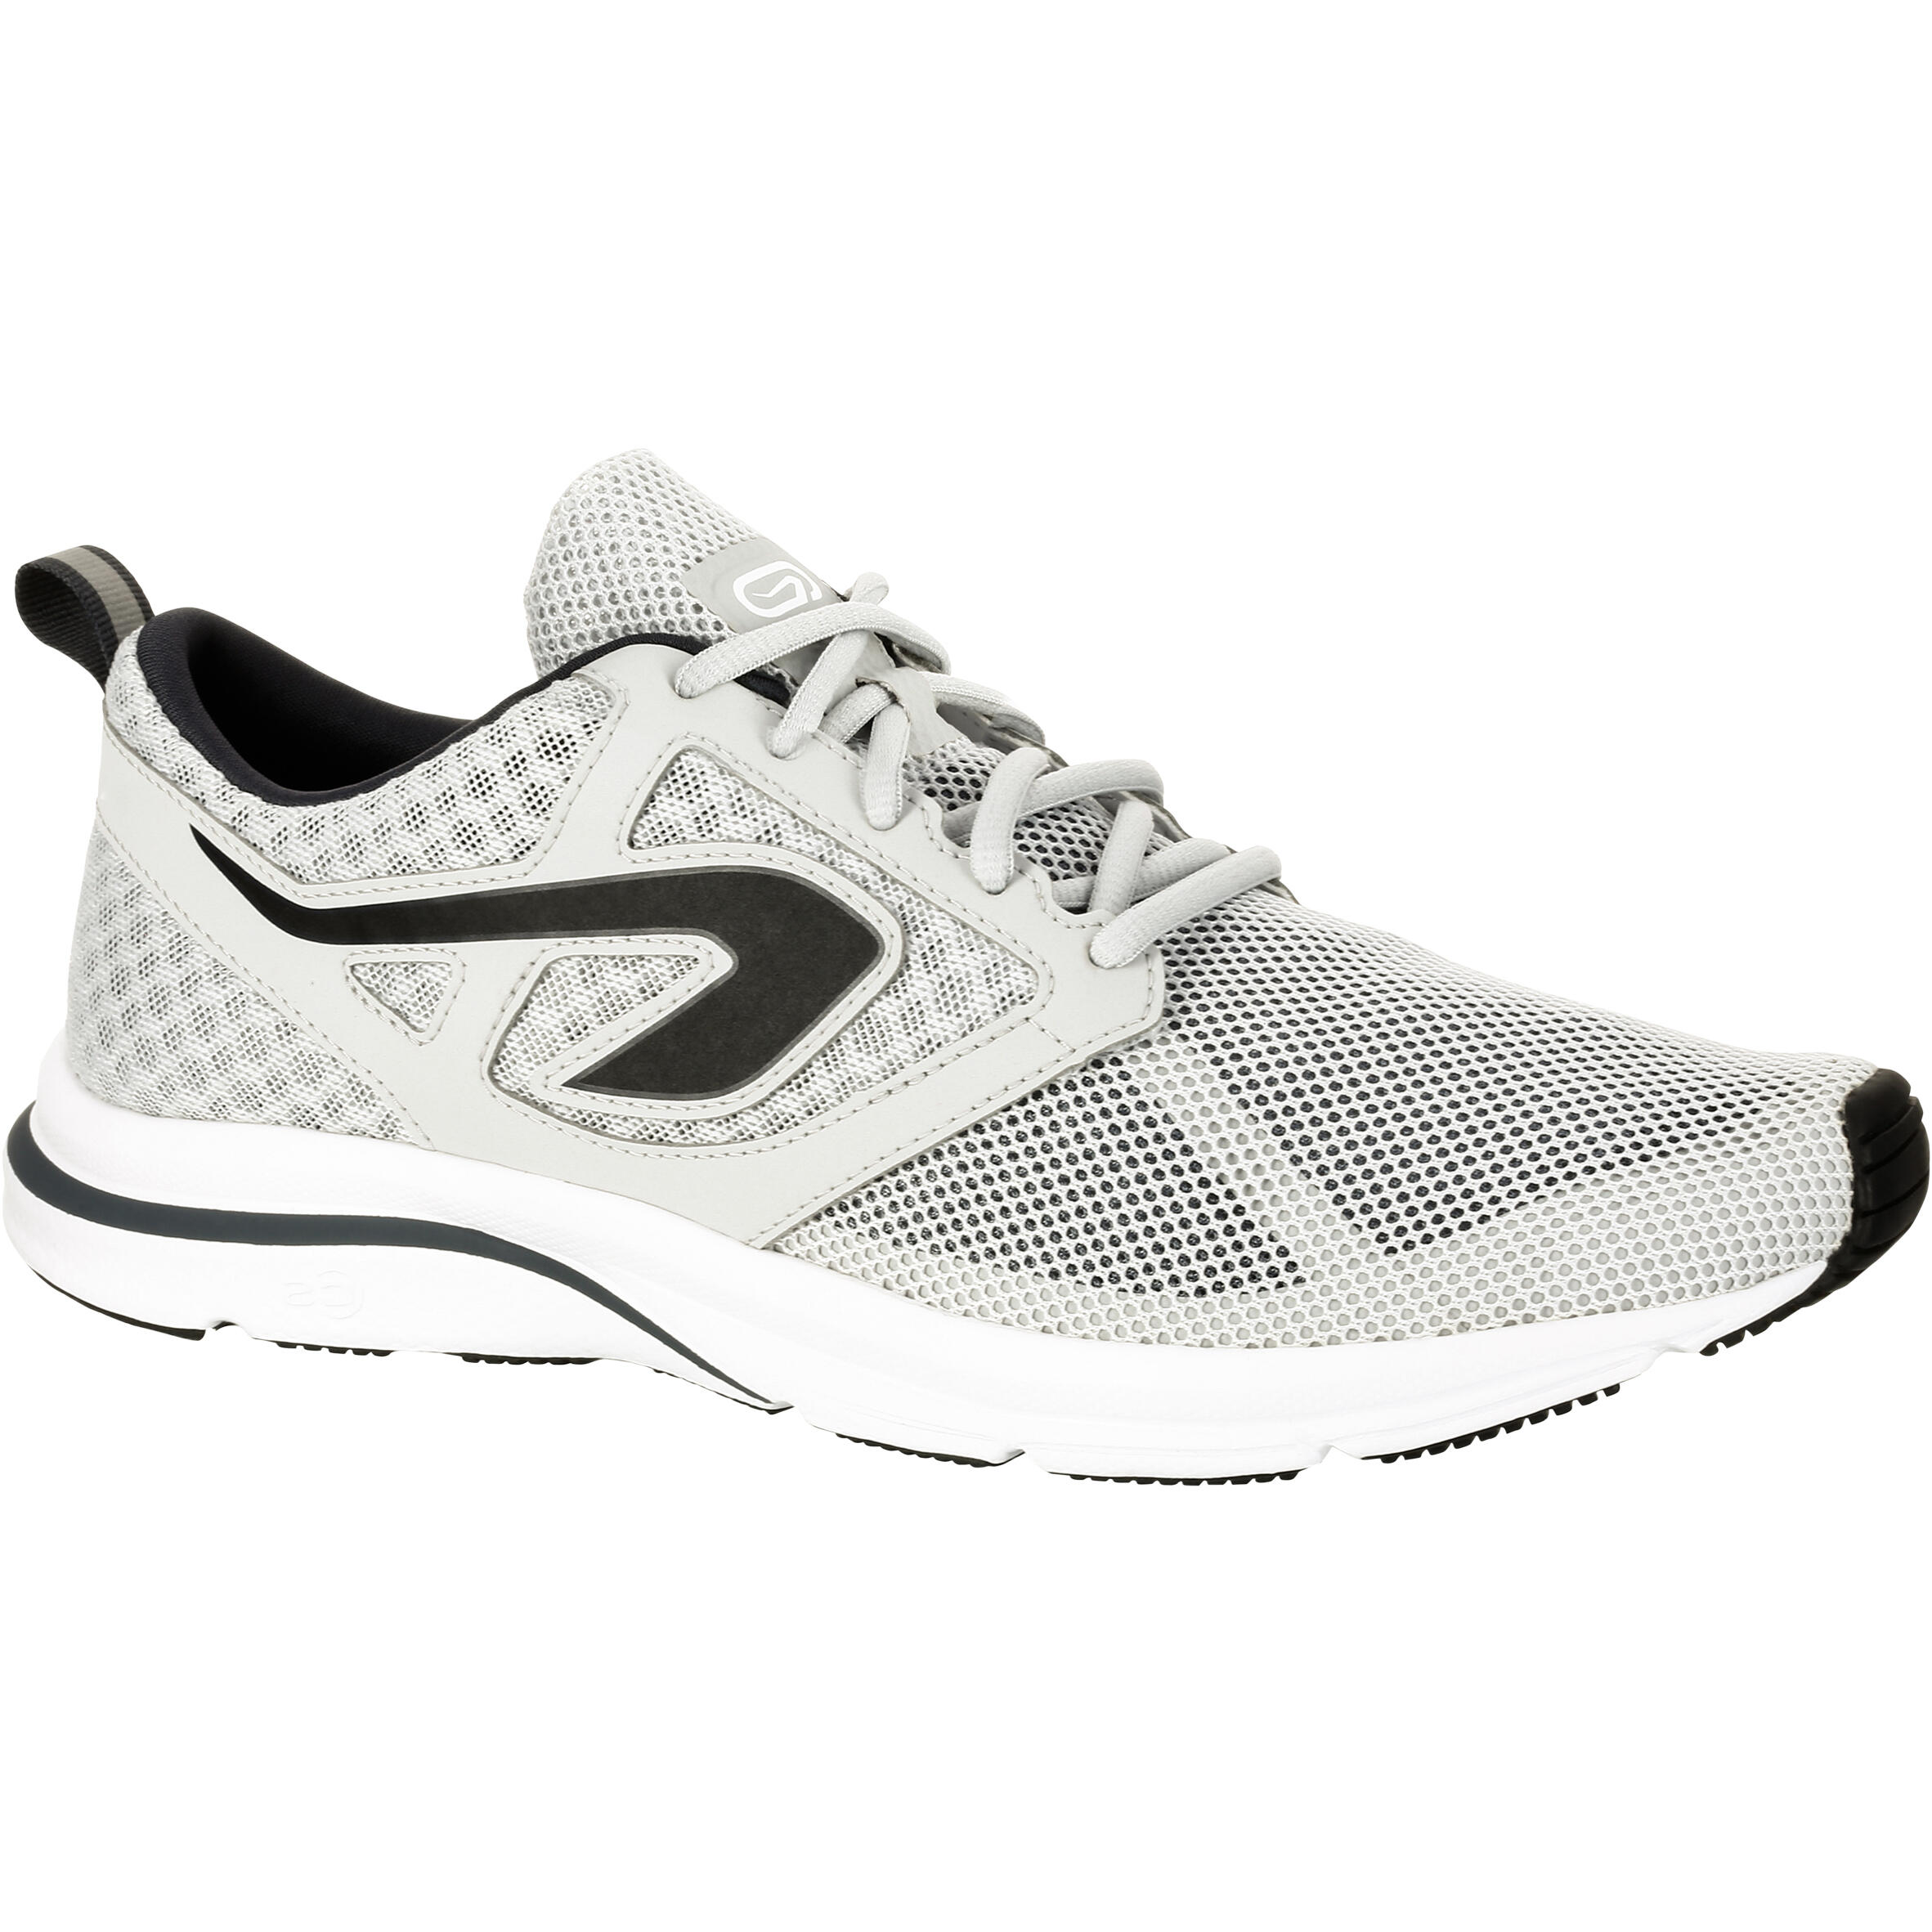 decathlon marathon shoes